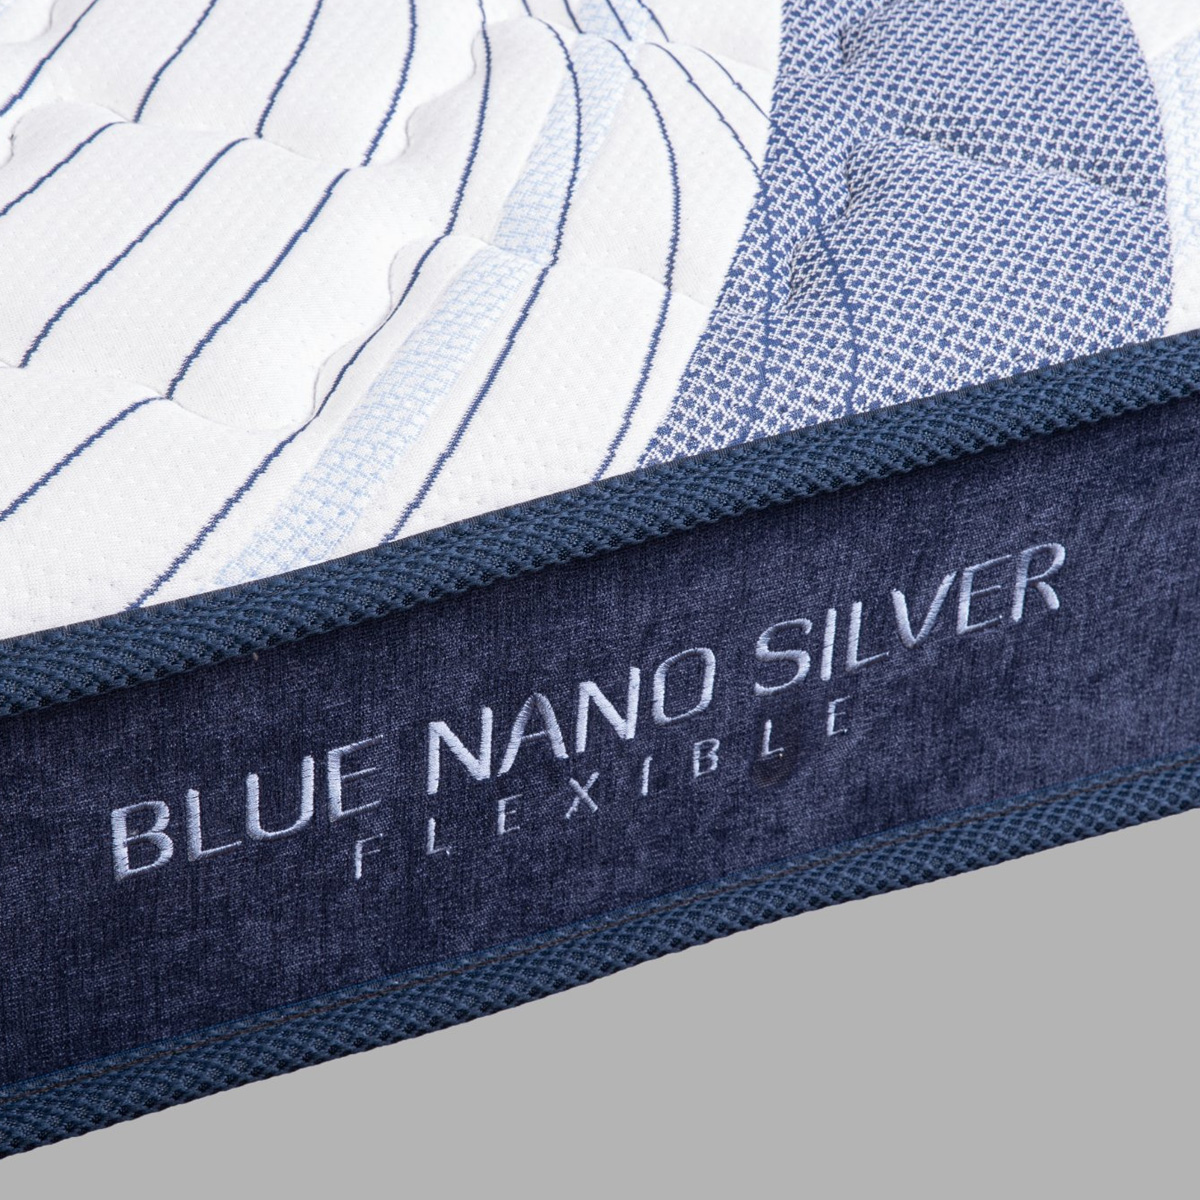 dem bong blue nano silver flexible hanvico 2